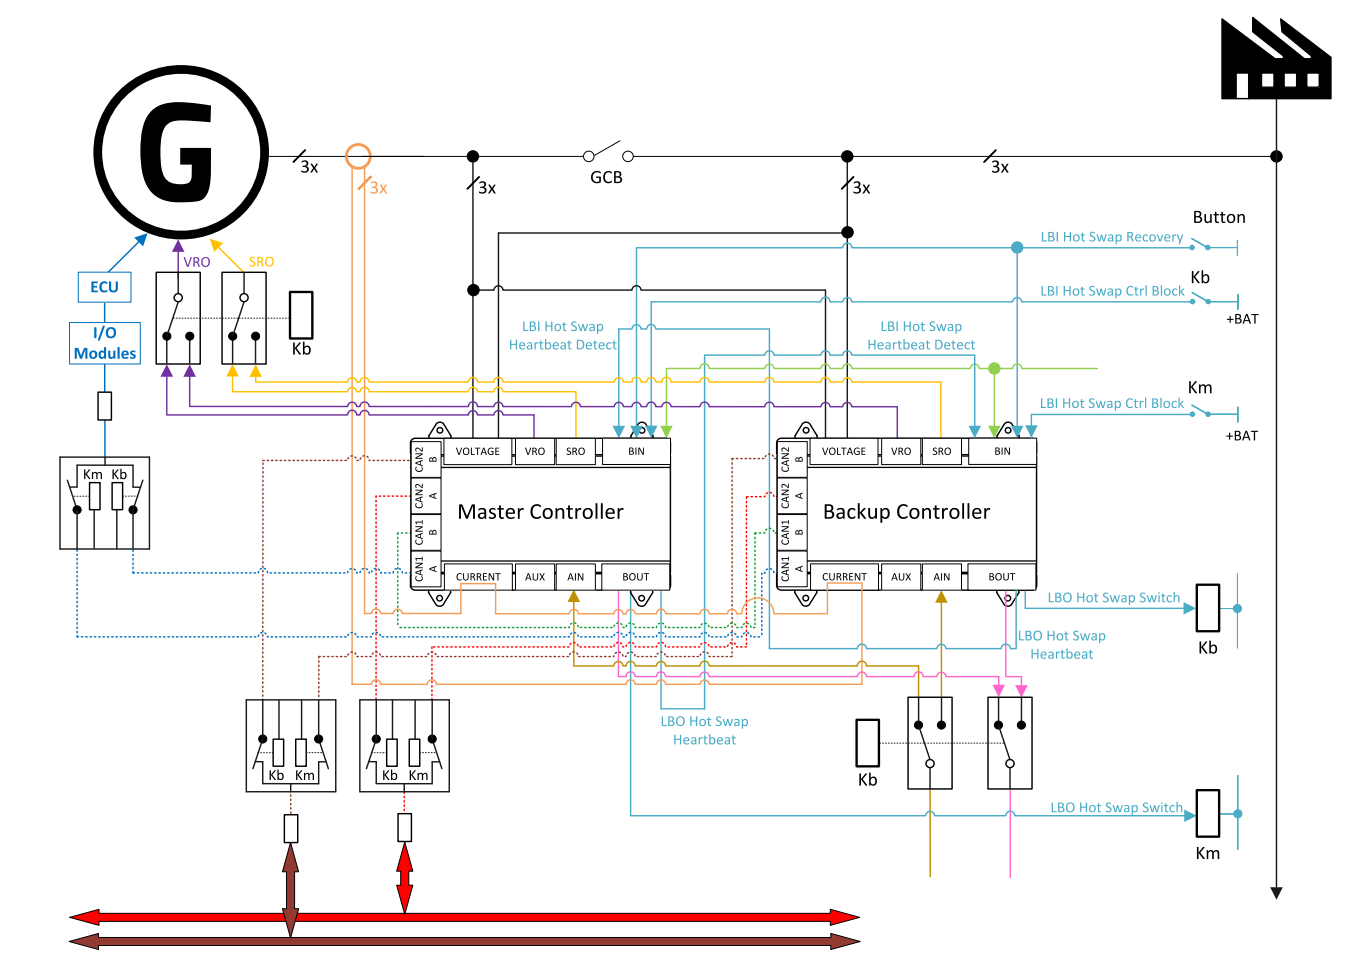 Wiring diagram for Hot Swap redundancy